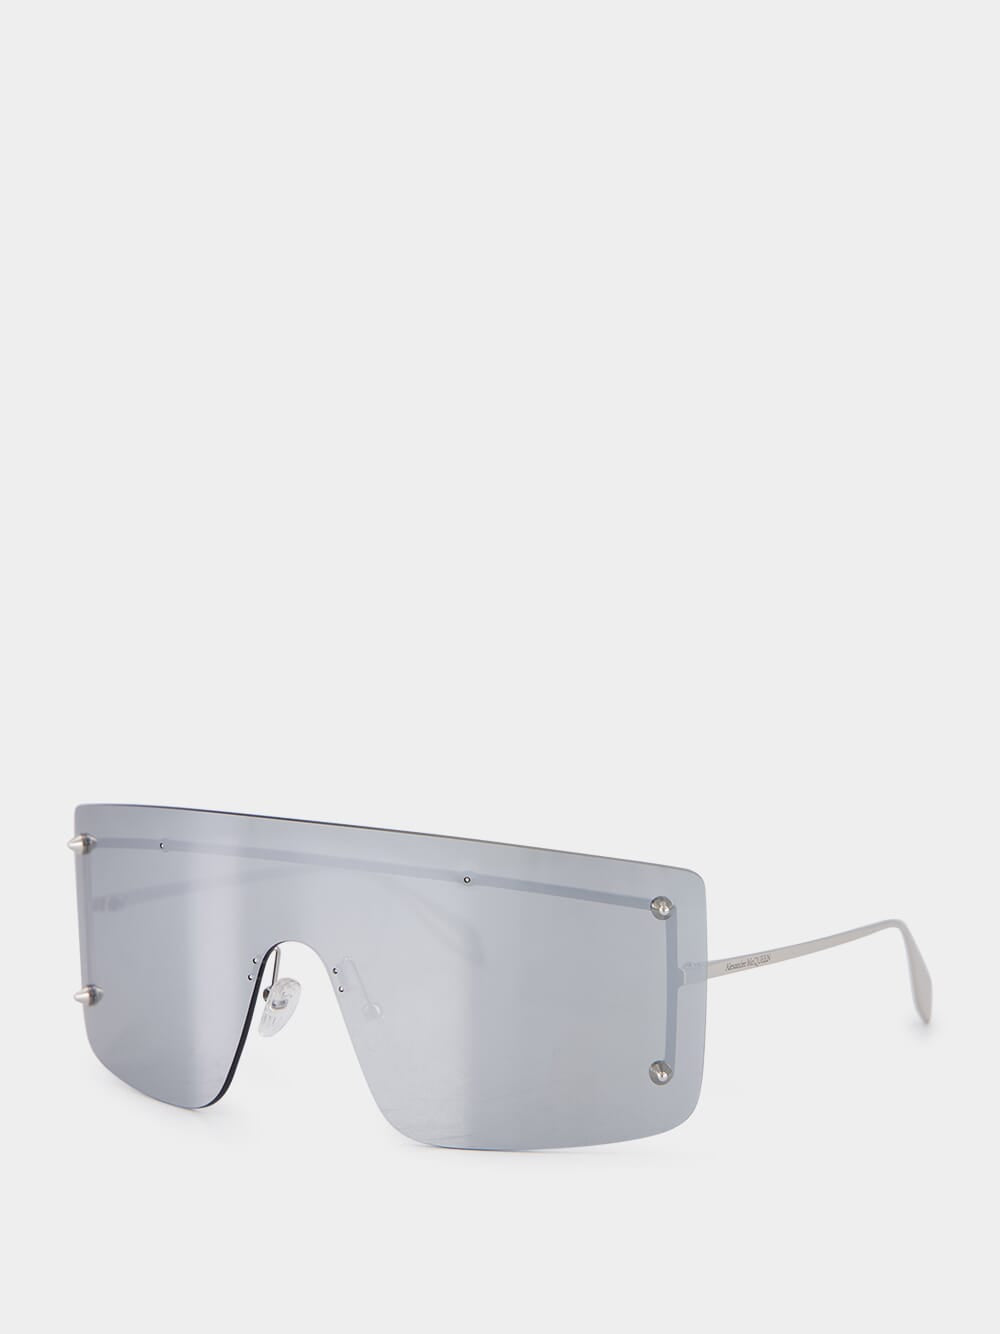 Silver Spike Studs Mask Sunglasses